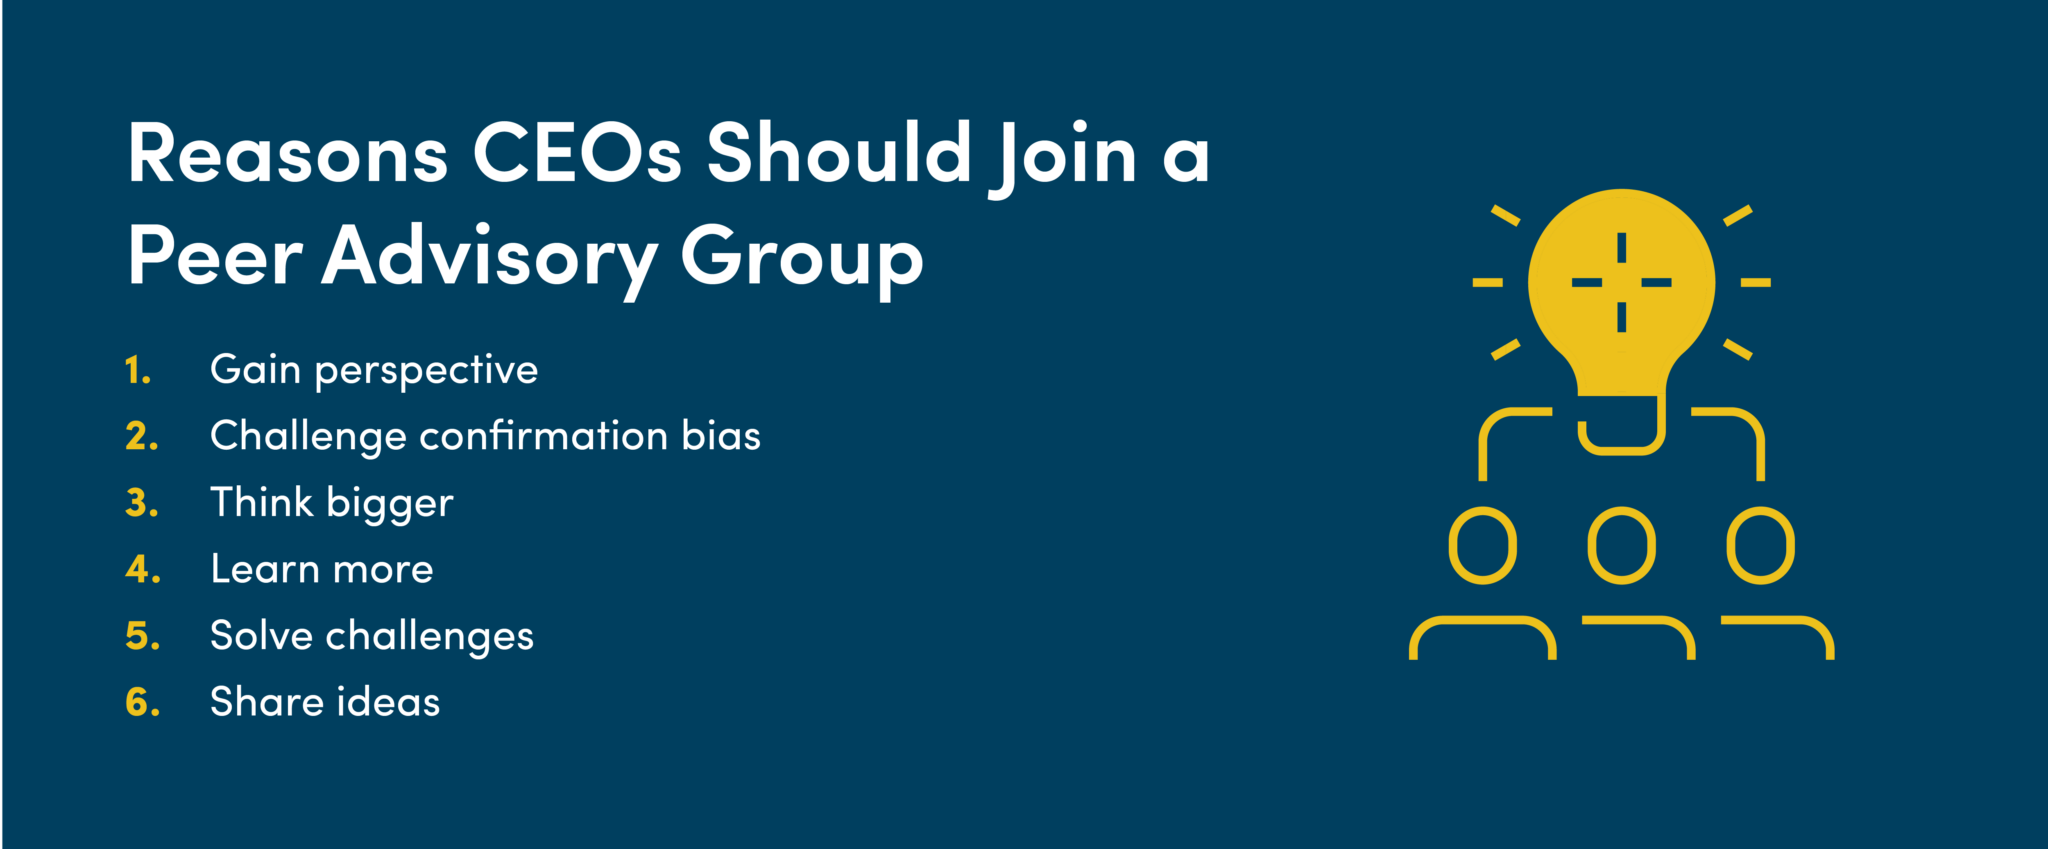 Reasons CEOs should join a peer advisory group